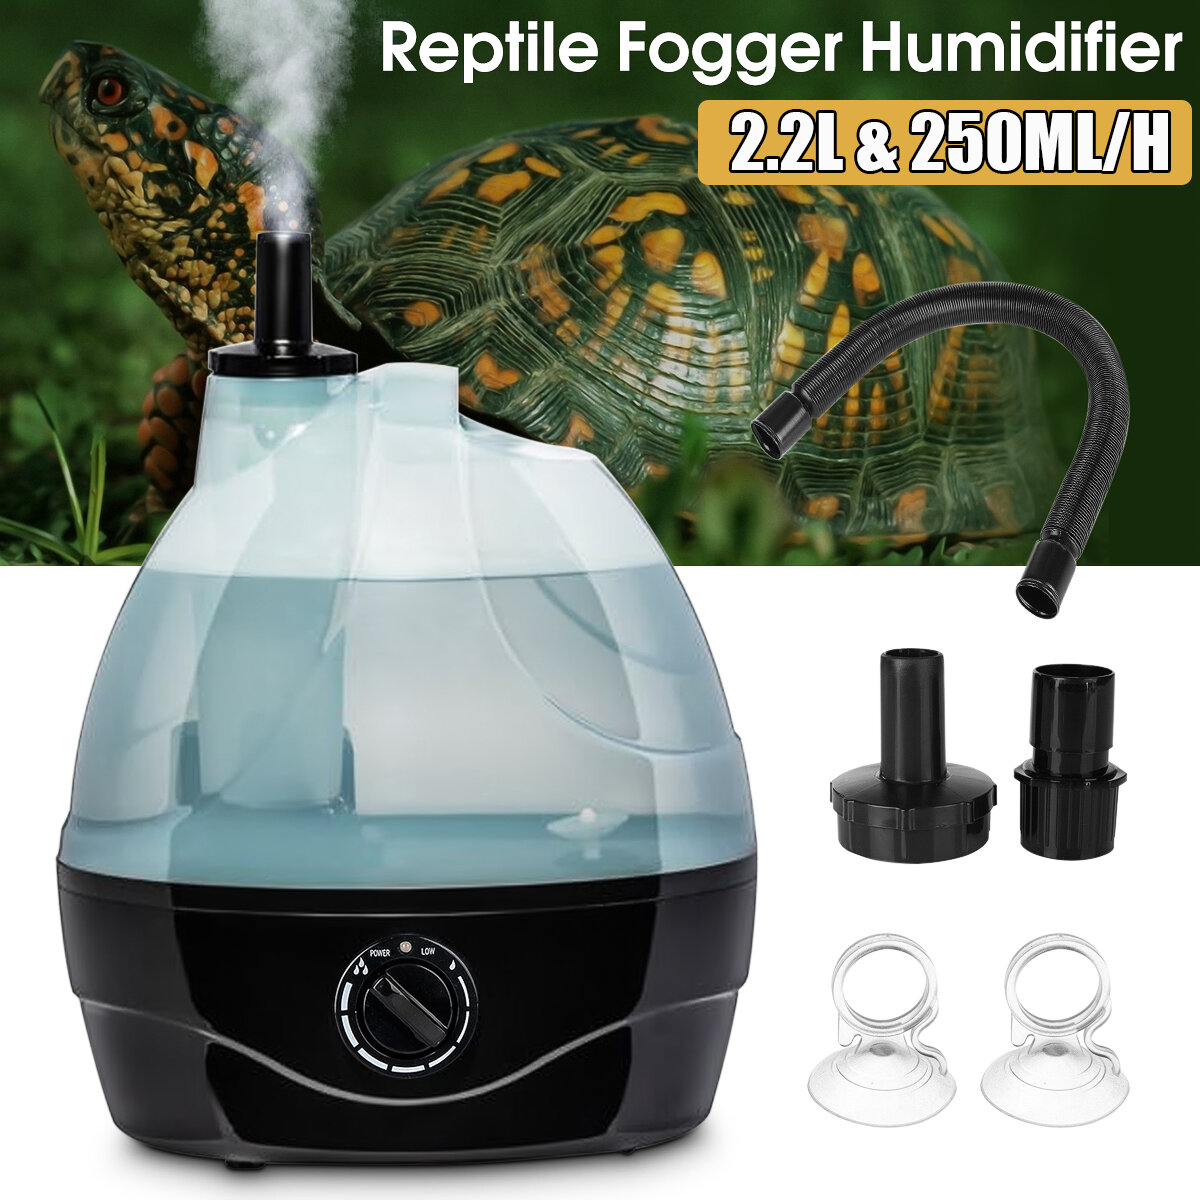 

2.2L Tank Amphibians Fogger Humidifier Reptile Vaporizer Fog Maker Generator